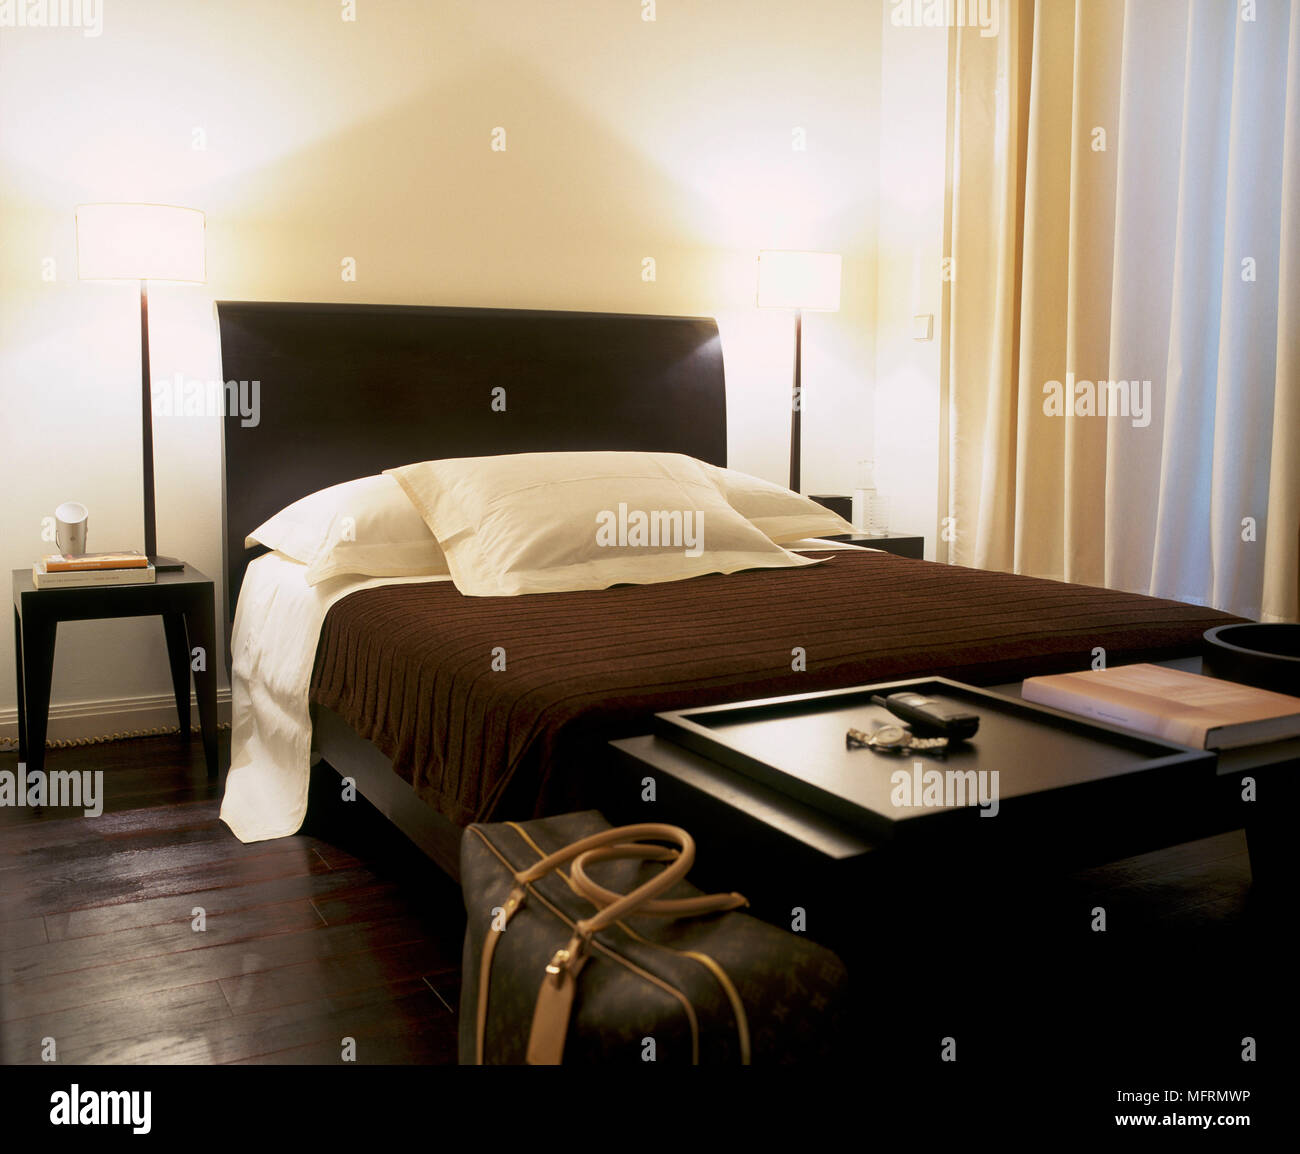 Un moderno dormitorio con una cama doble con cabecero tapizado brown bedcover mesa lateral piso de madera par de luces encendidas Foto de stock